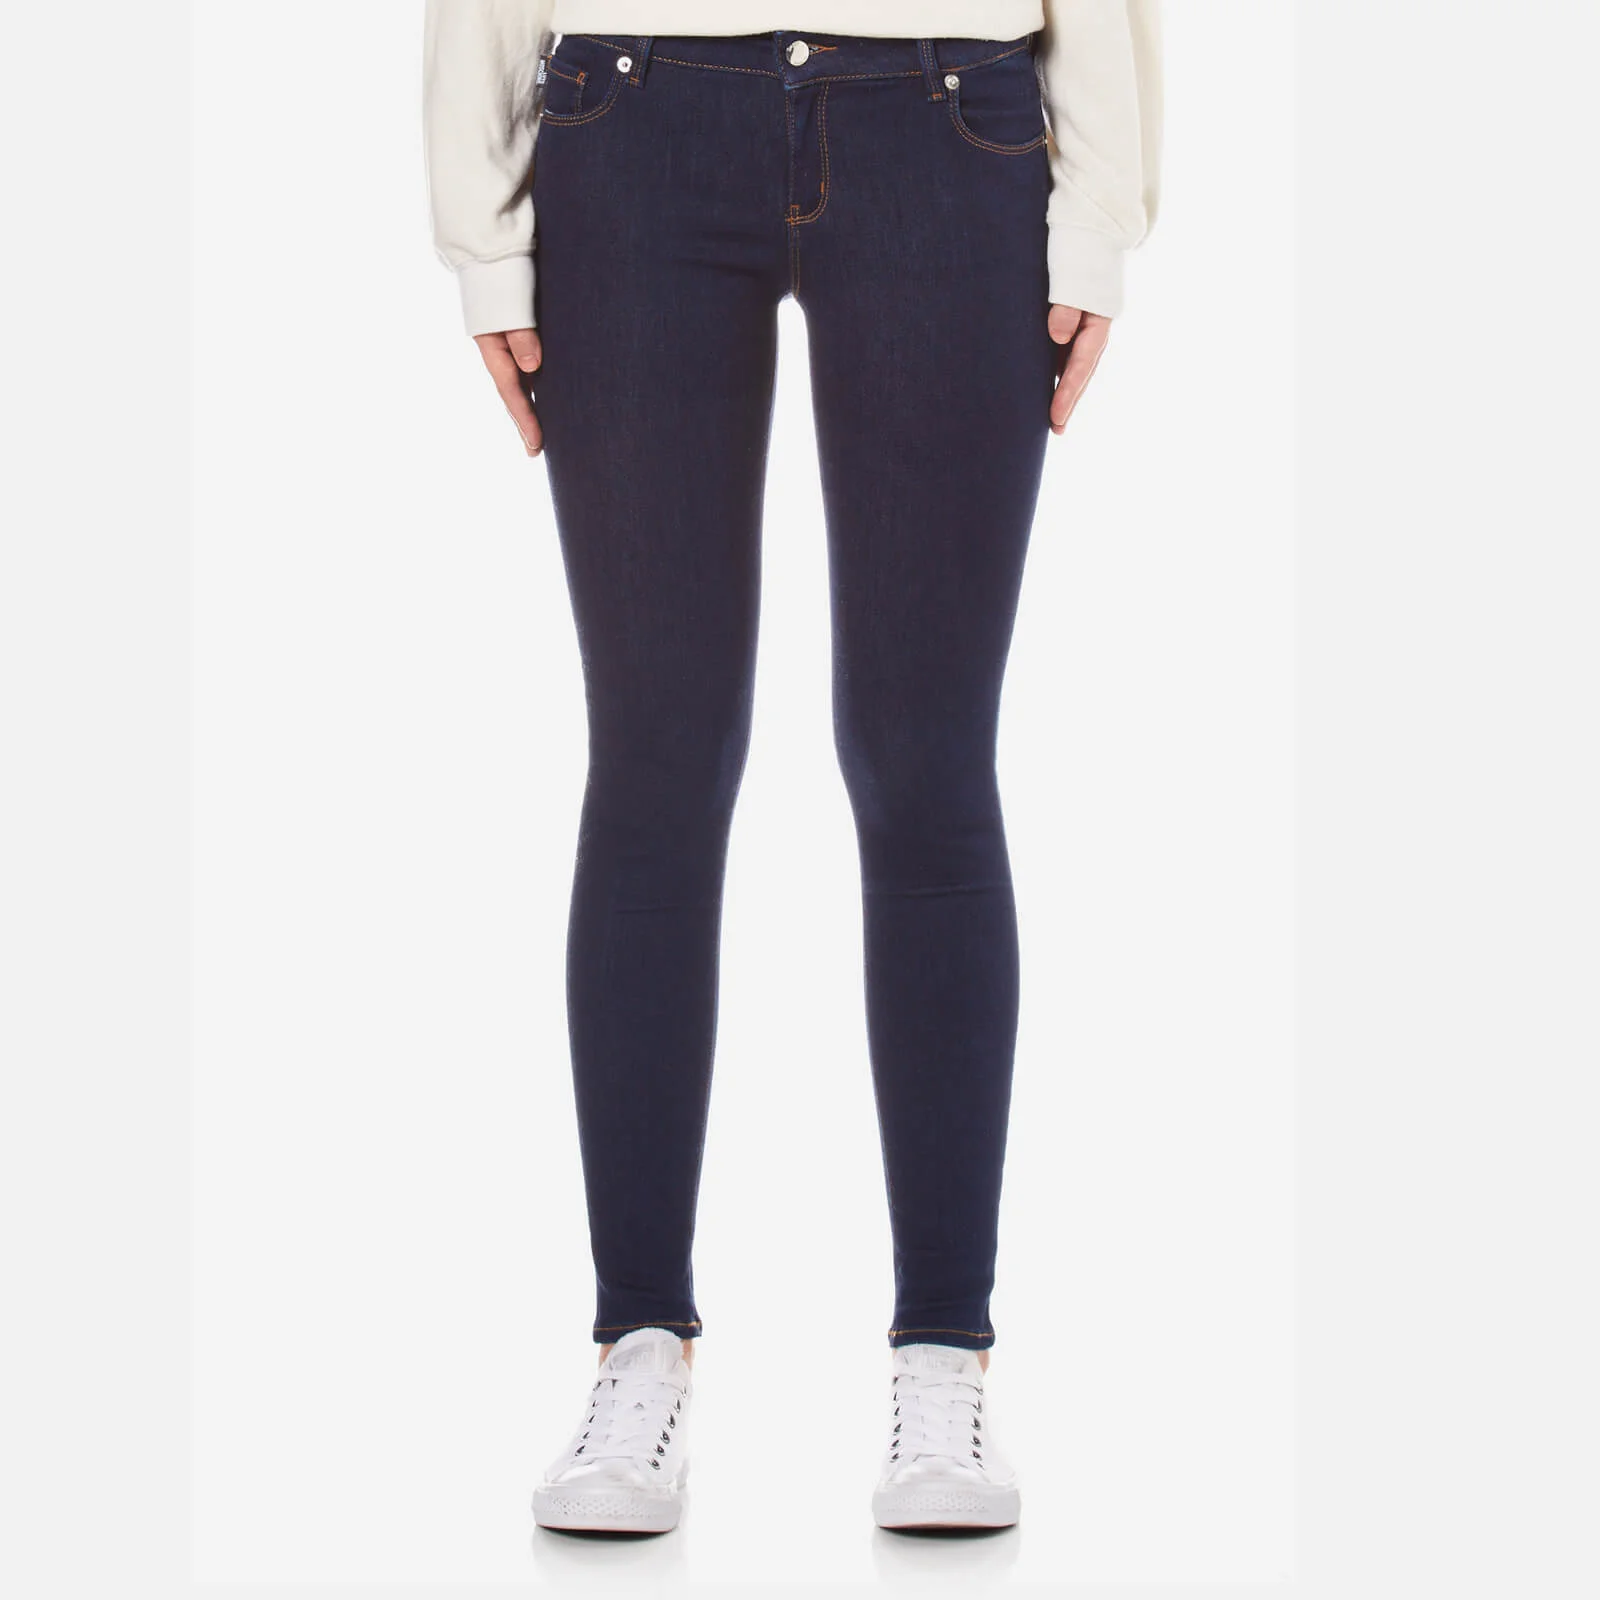 Love Moschino Women's 5 Pocket Skinny Fit Jeans - Denim Image 1